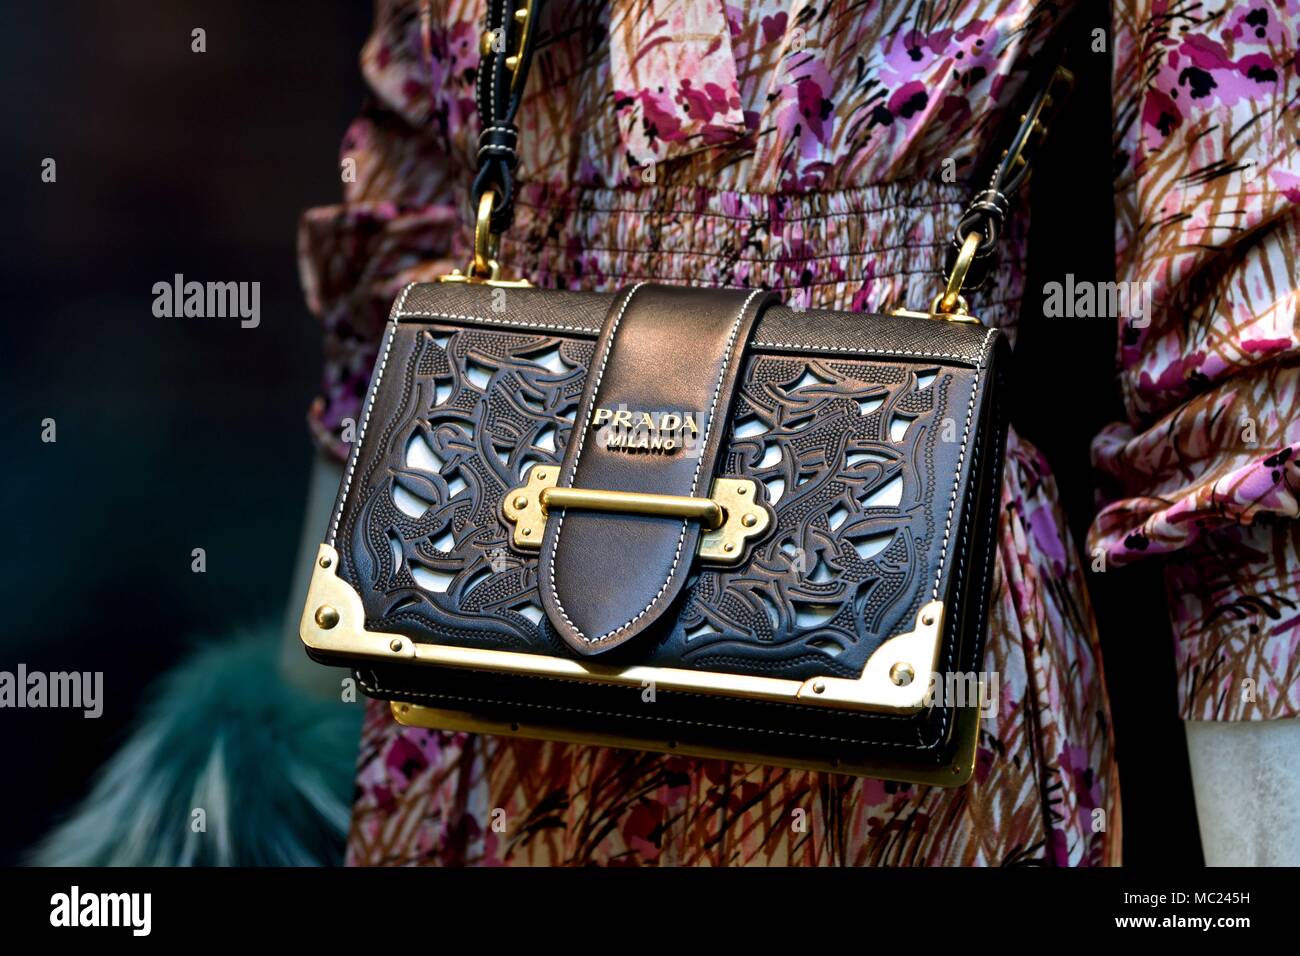 Prada Milano Bag High Resolution Stock Photography and Images - Alamy